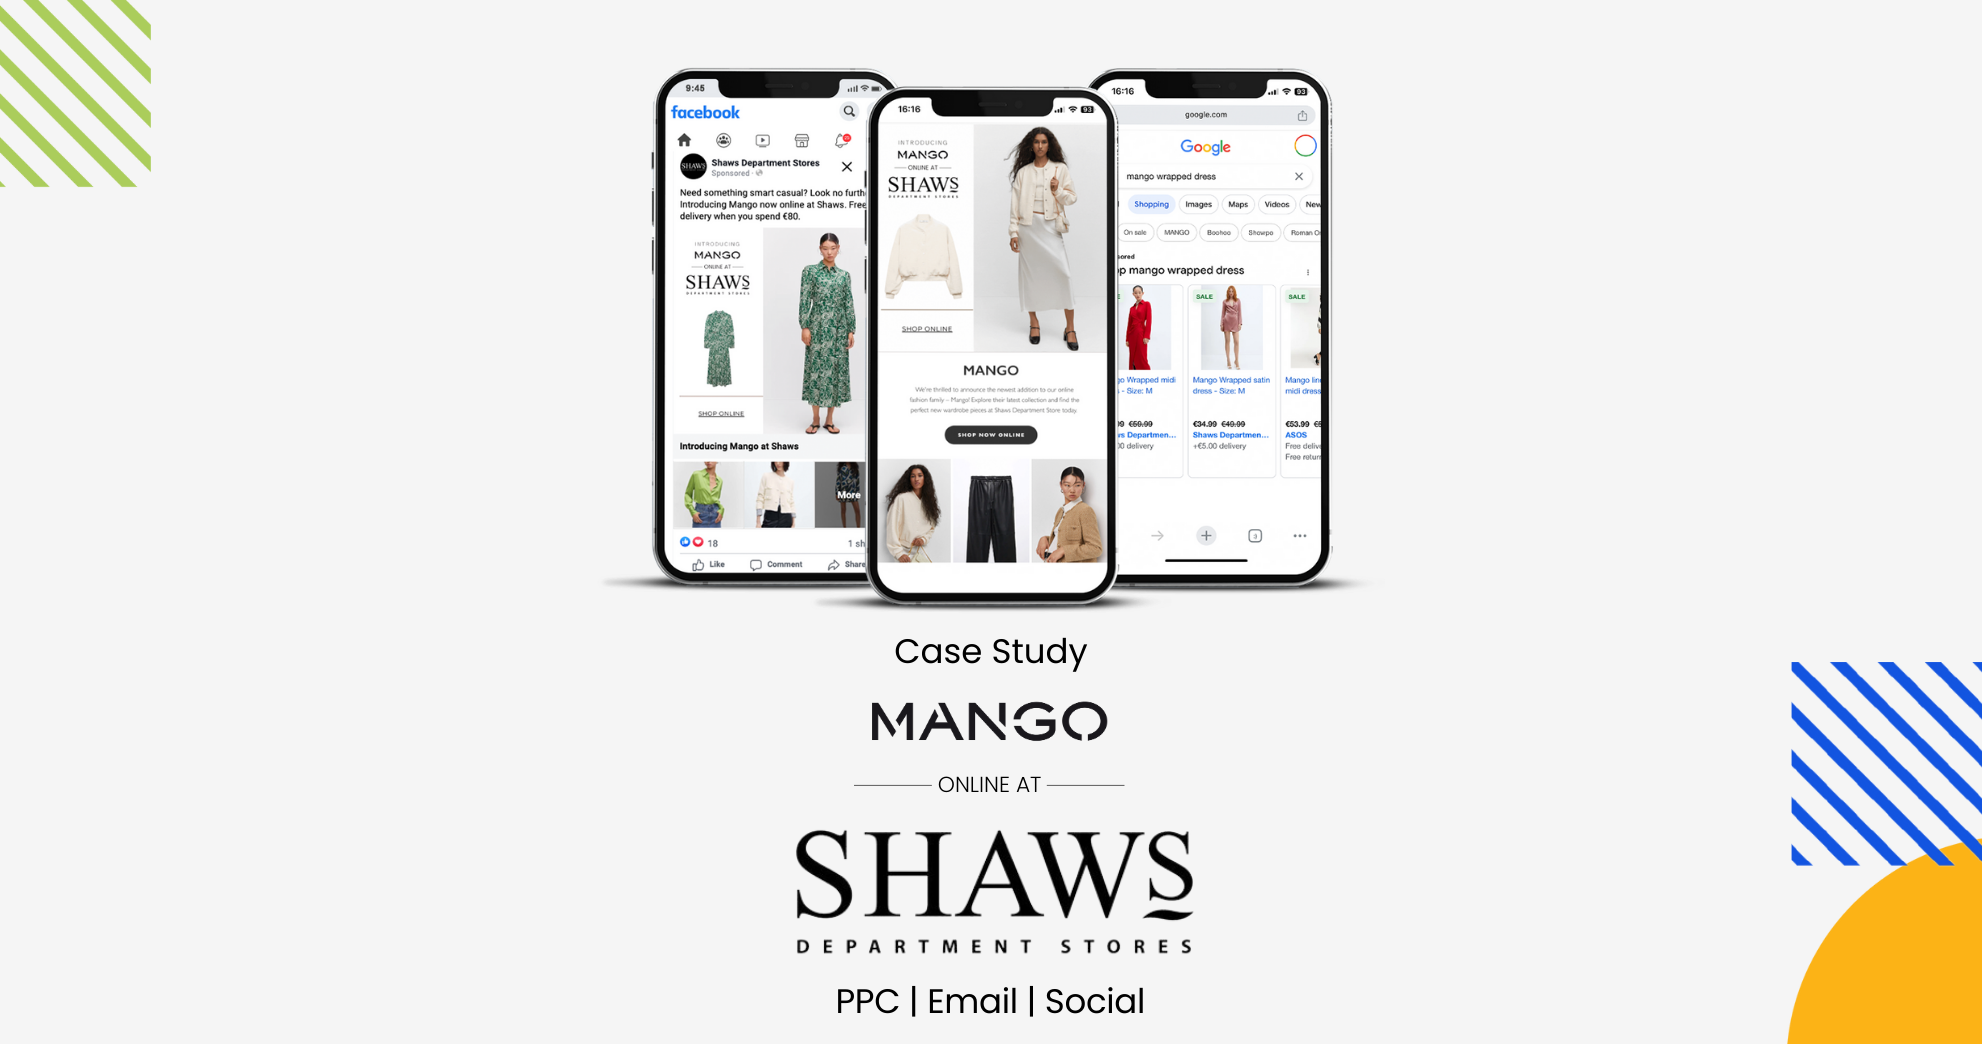 Mango online at Shaws - Case Study